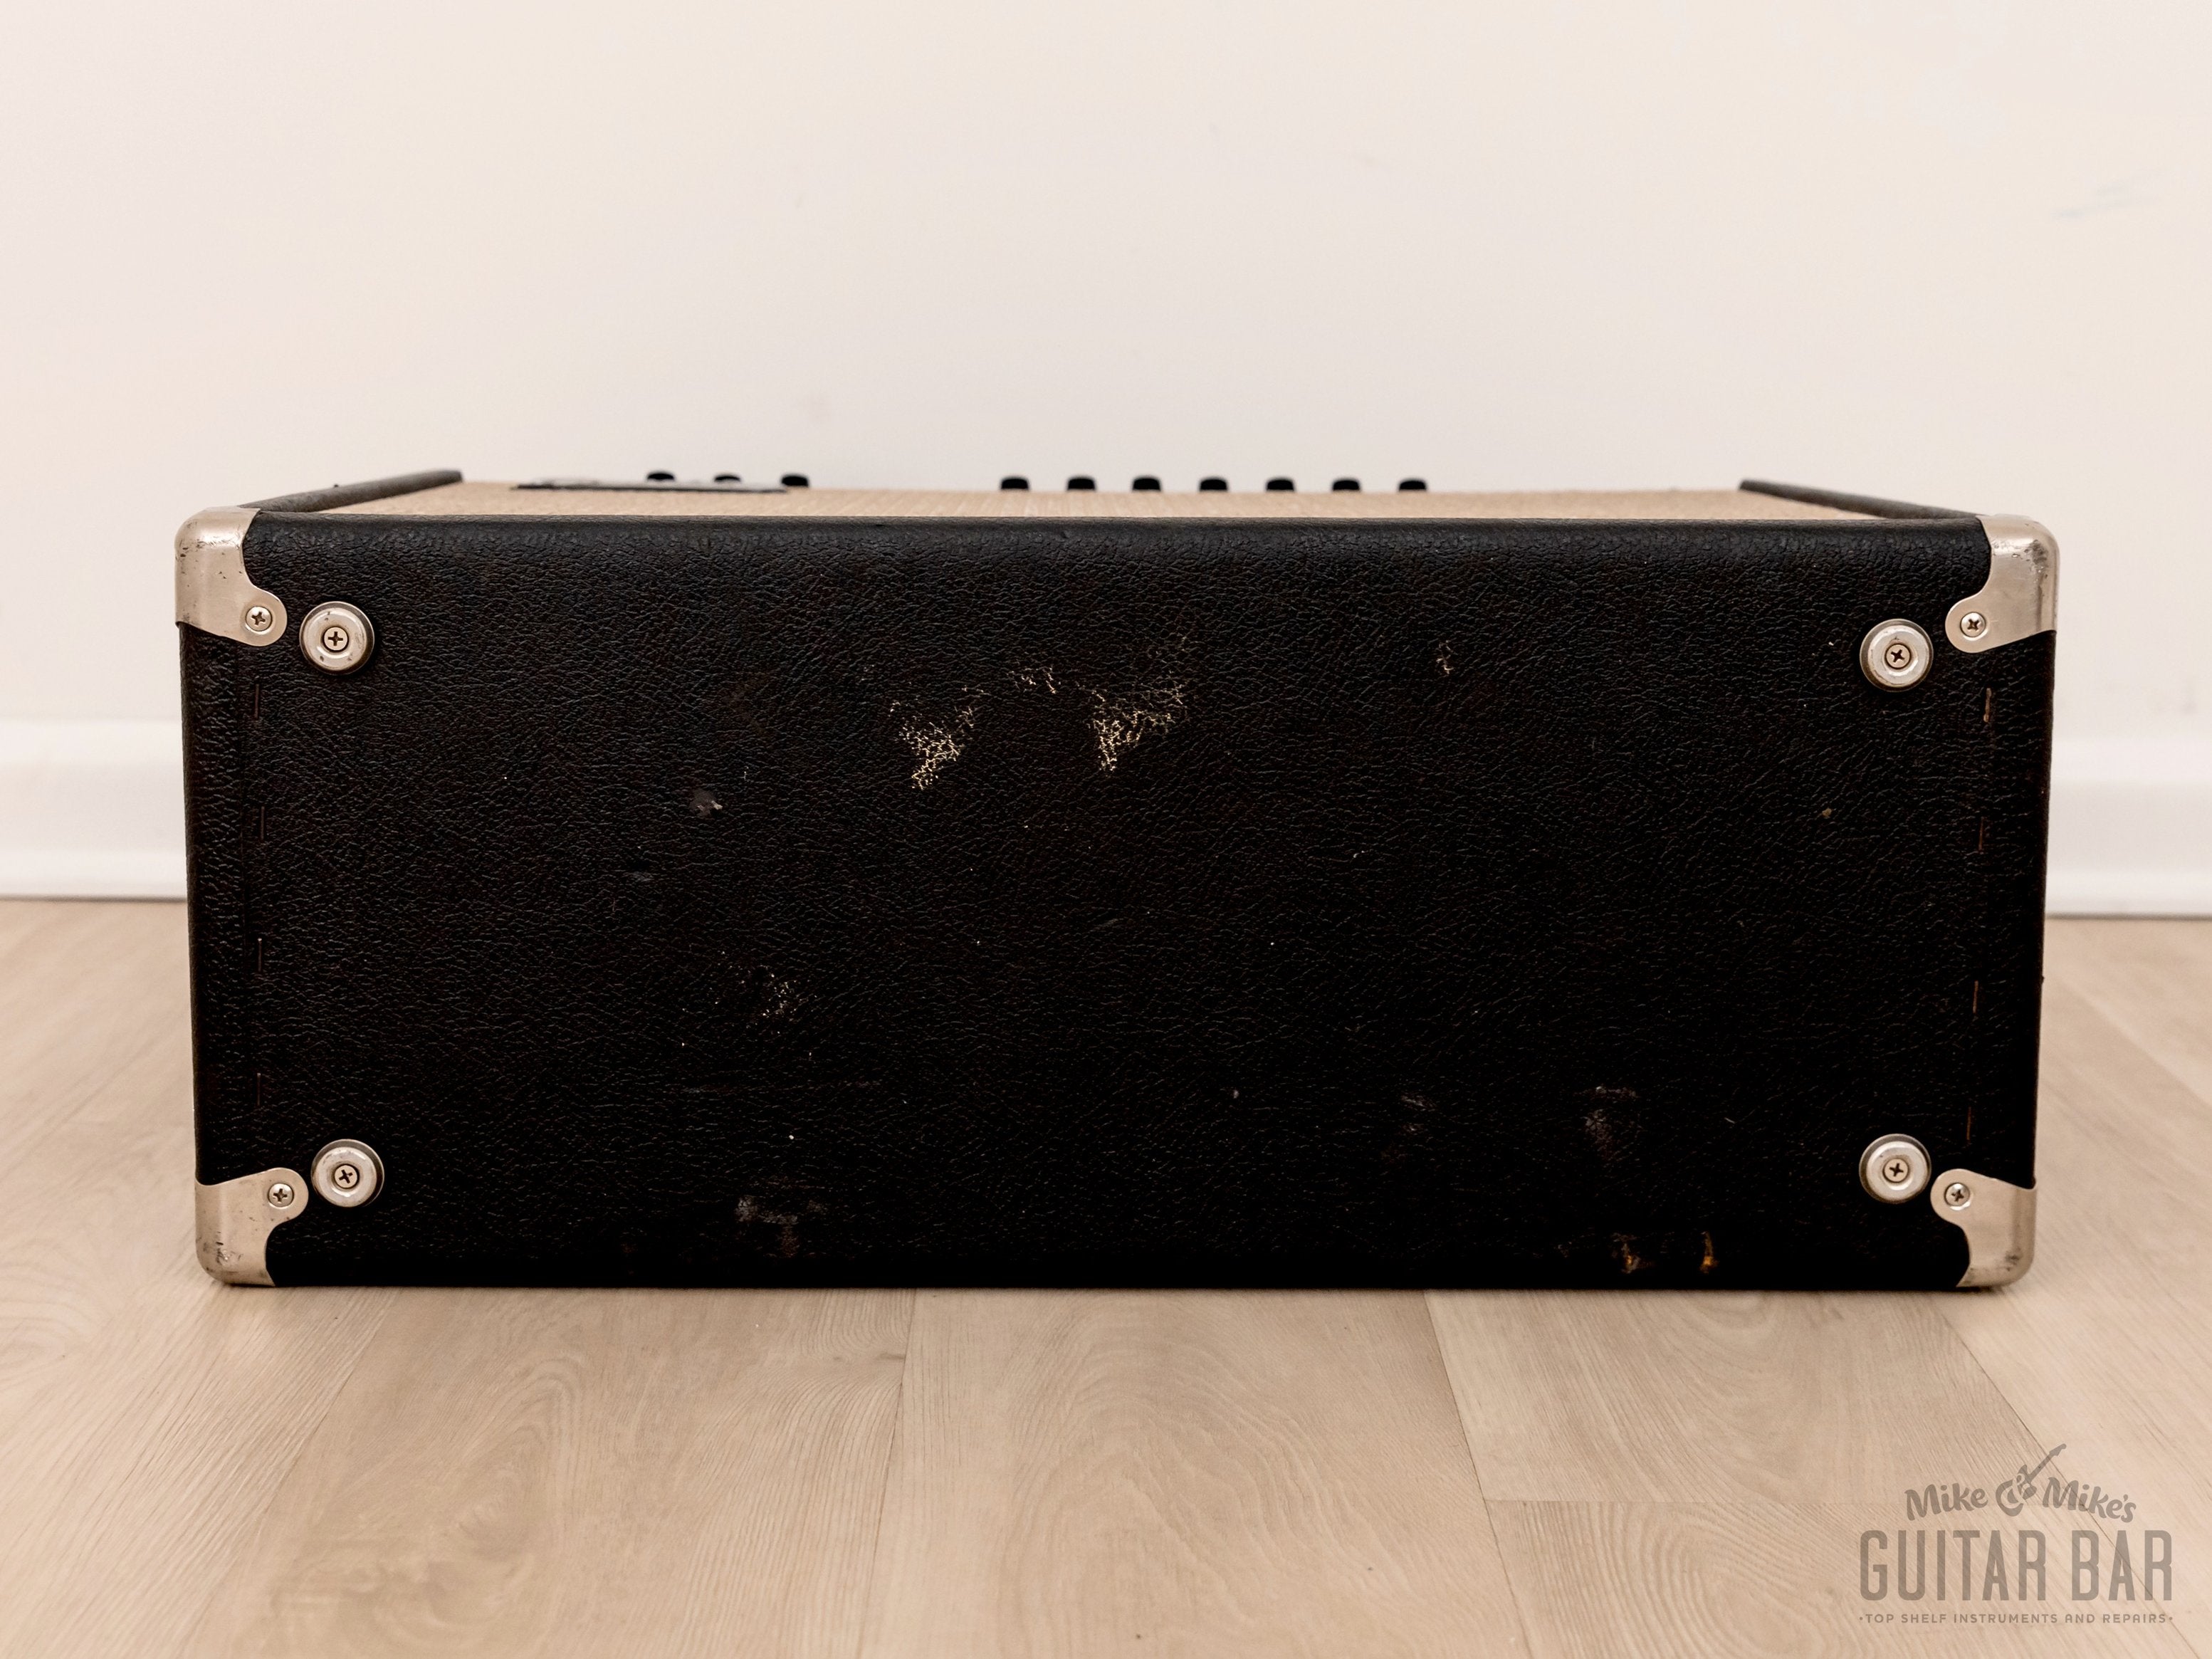 1965 Fender Super Reverb Black Panel Vintage Tube Amp AB763 w/ Ceramic Speakers, Cover & Ftsw